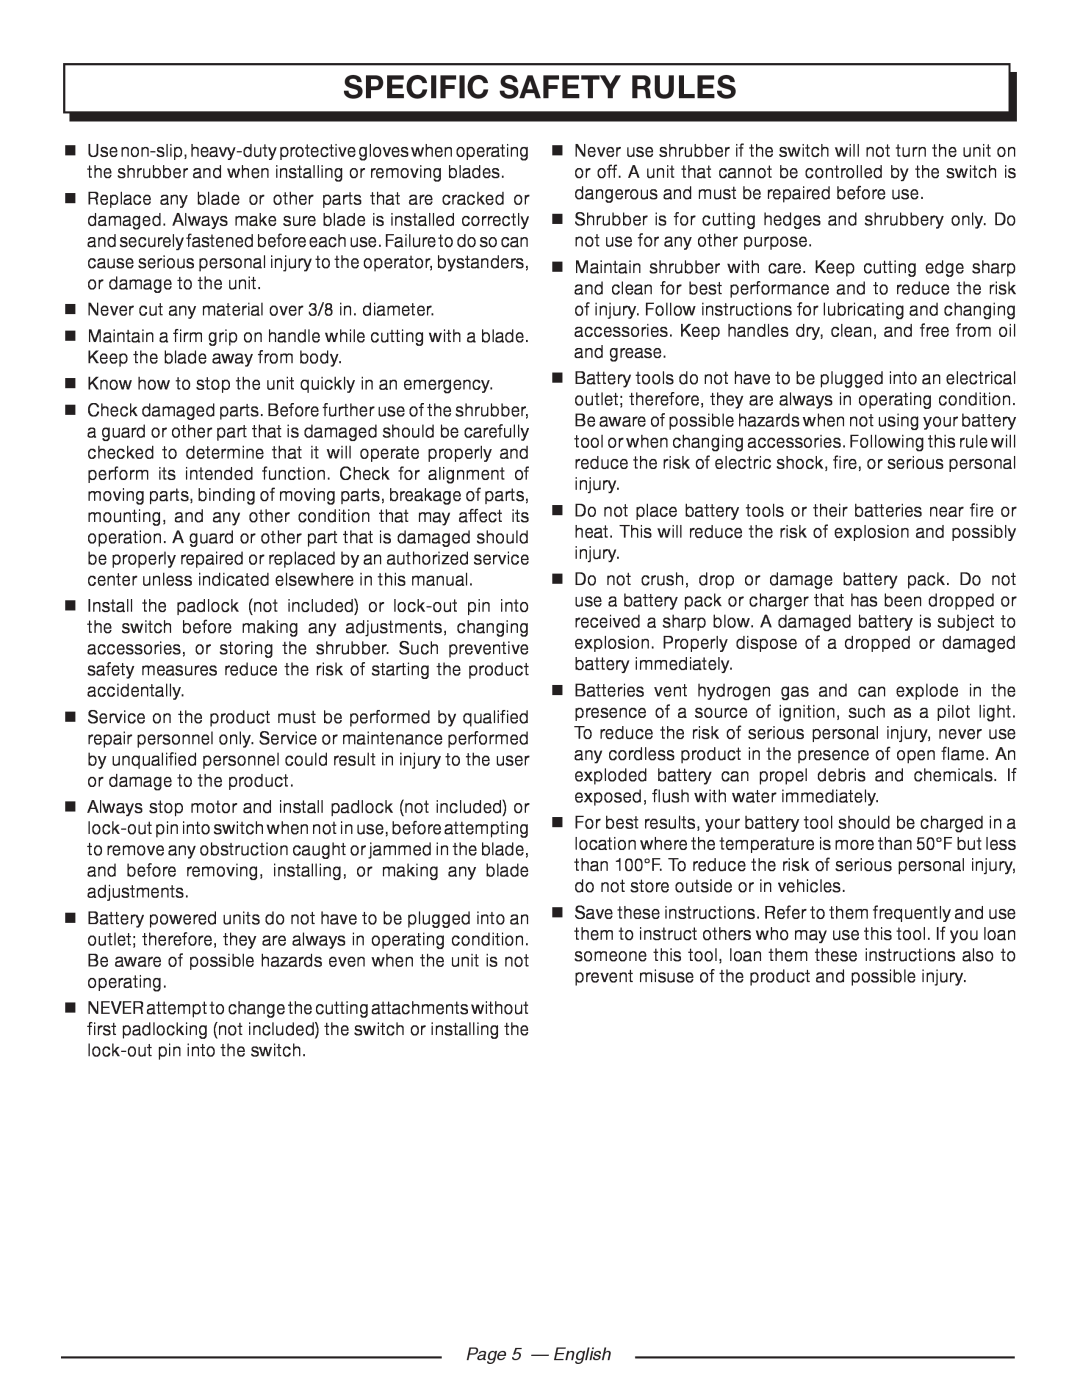 Homelite UT44171 manuel dutilisation specific SAFETY RULES, Page 5 - English 